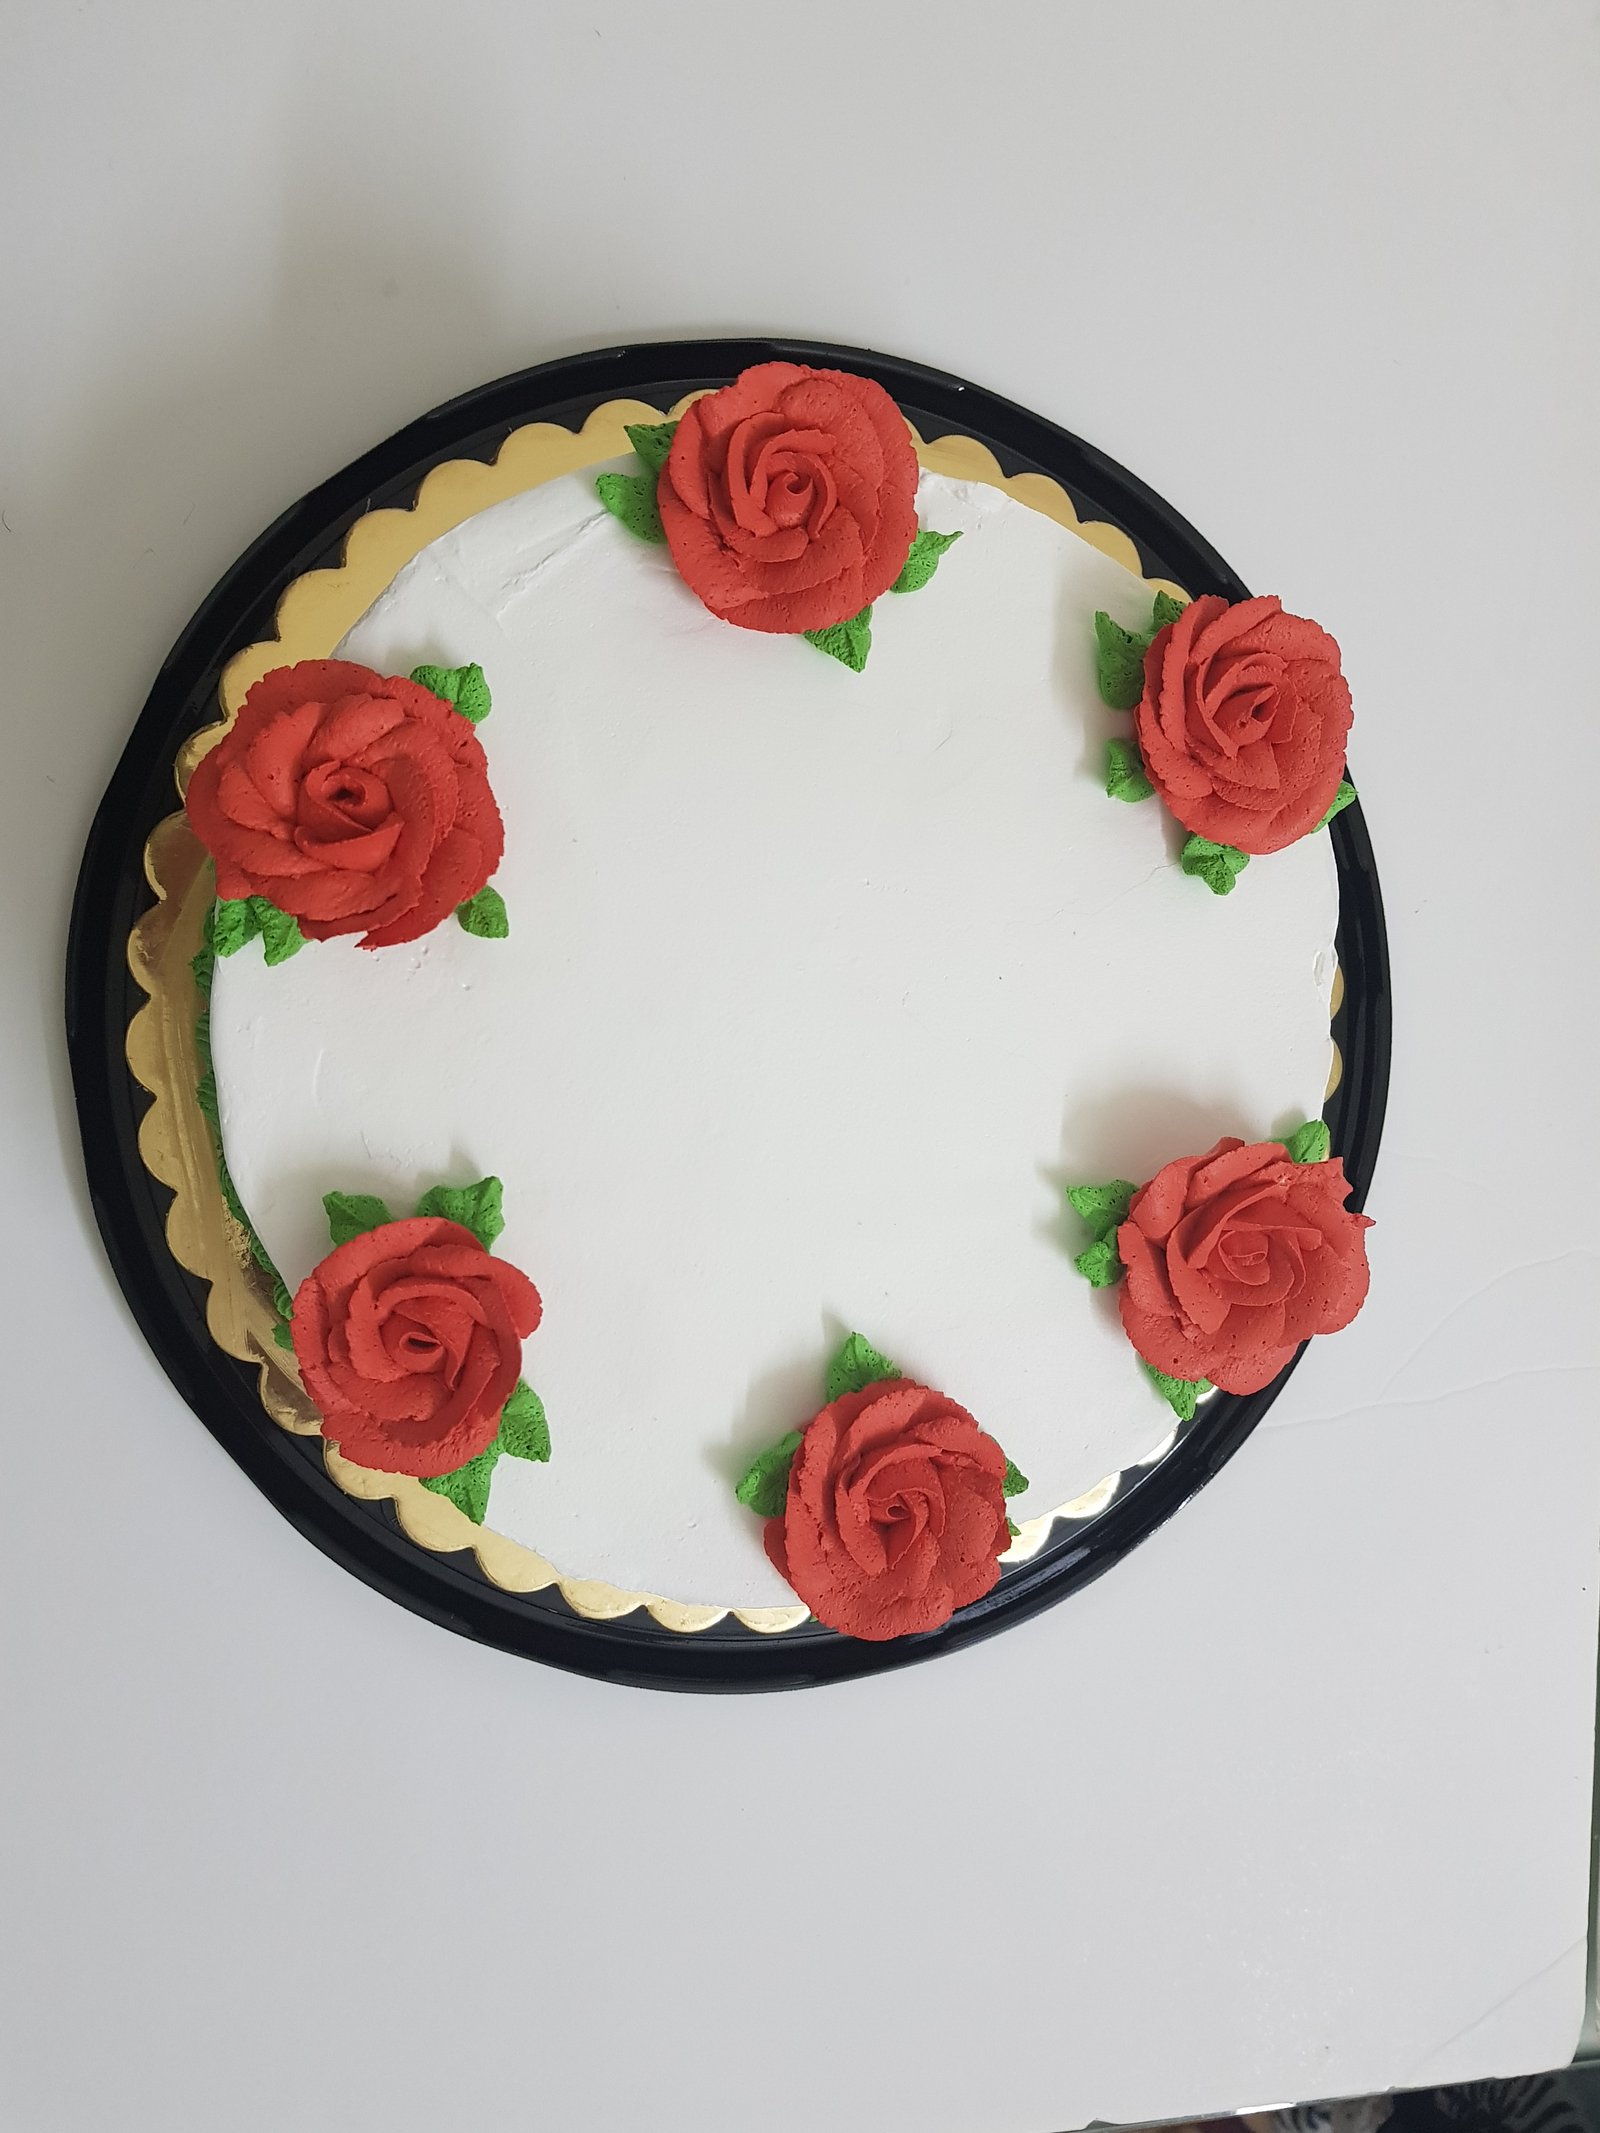 Happy Rose Day Name Cake 7th Feb - My Name Cake